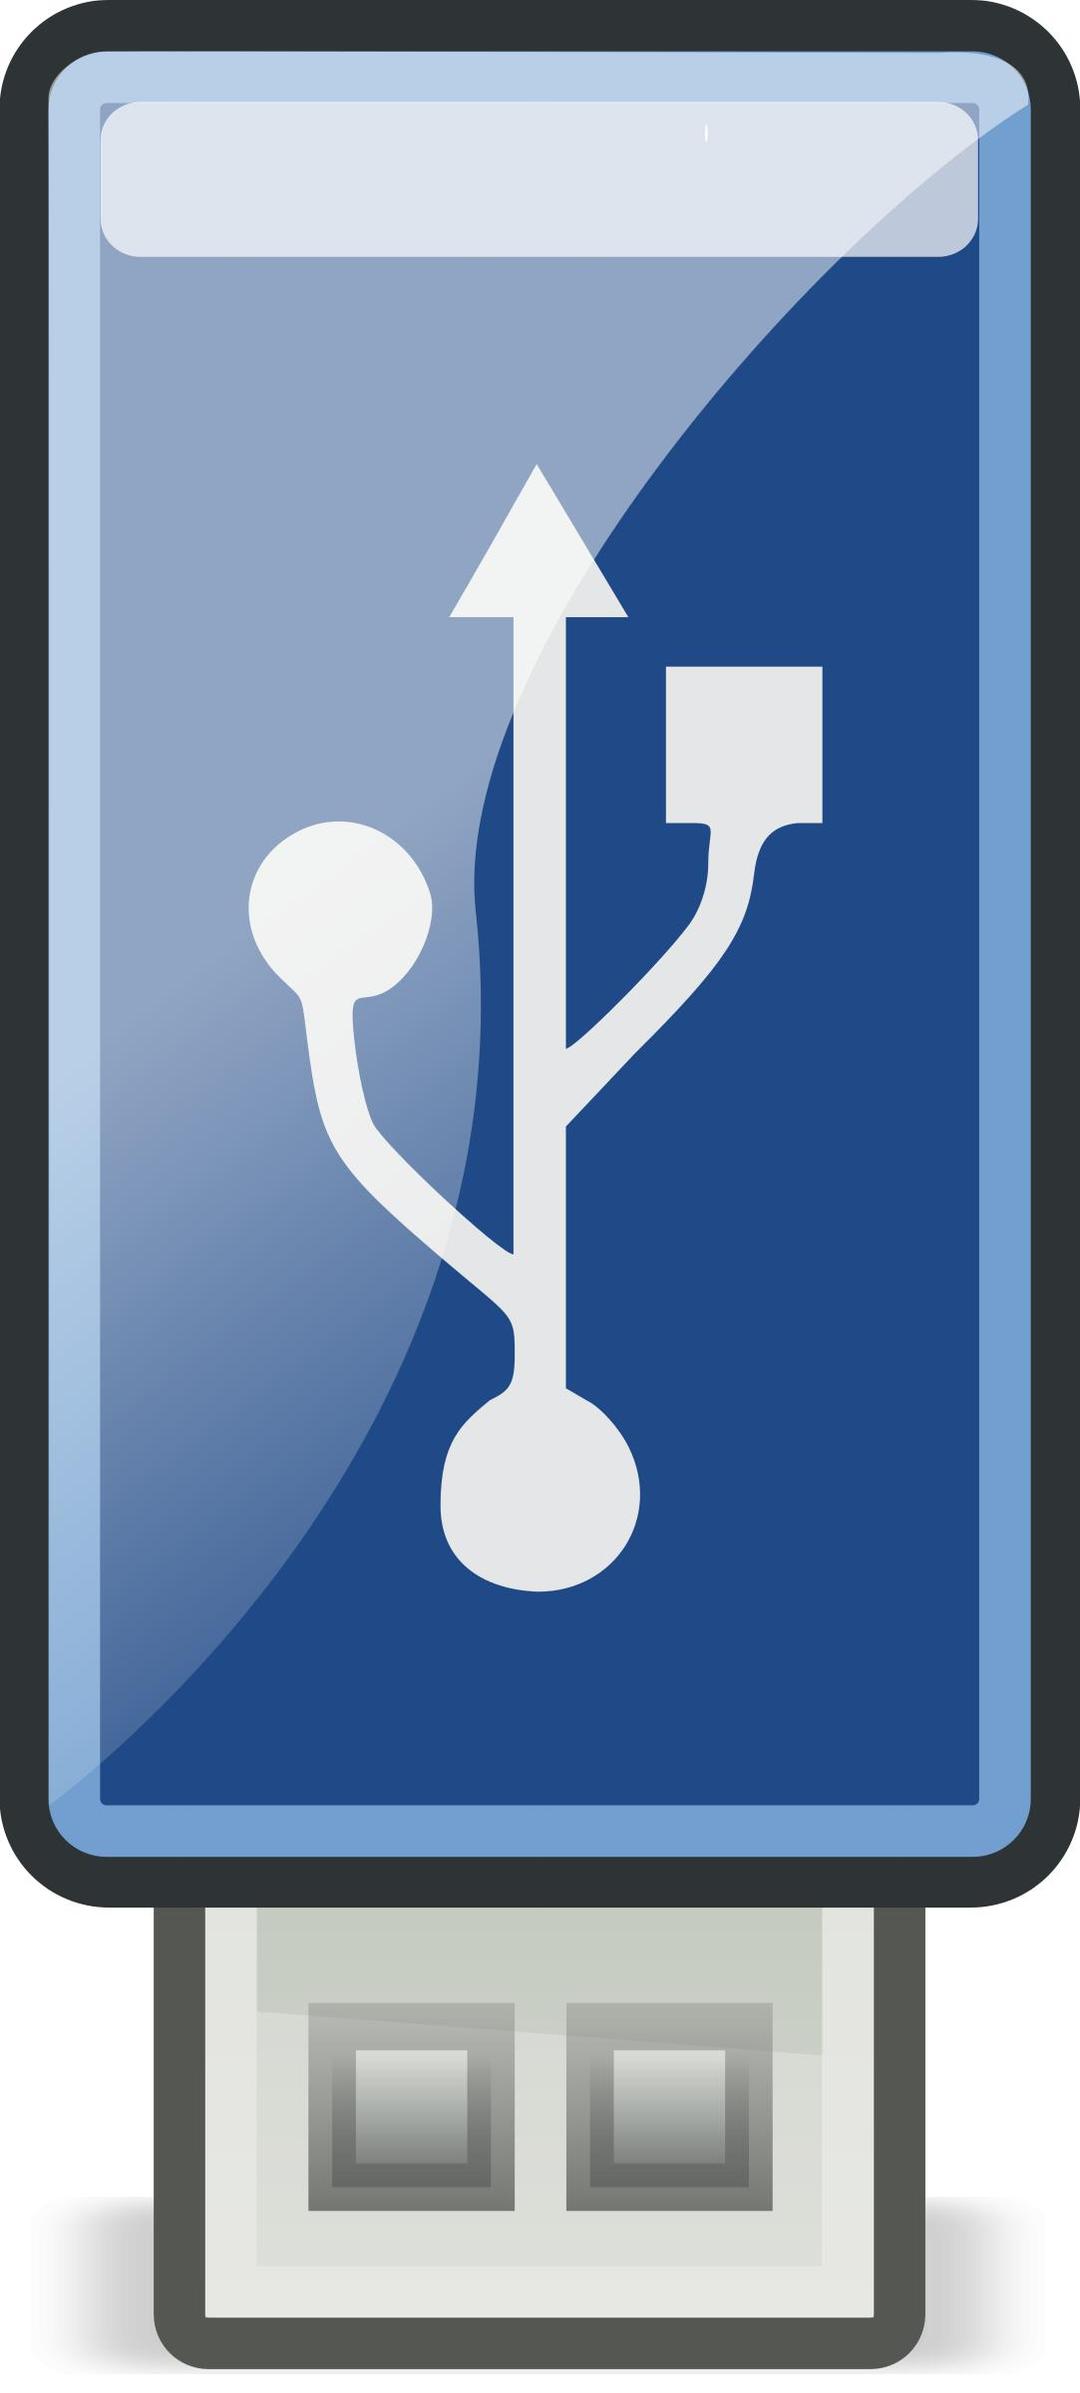 USB Blue - Tango style png transparent